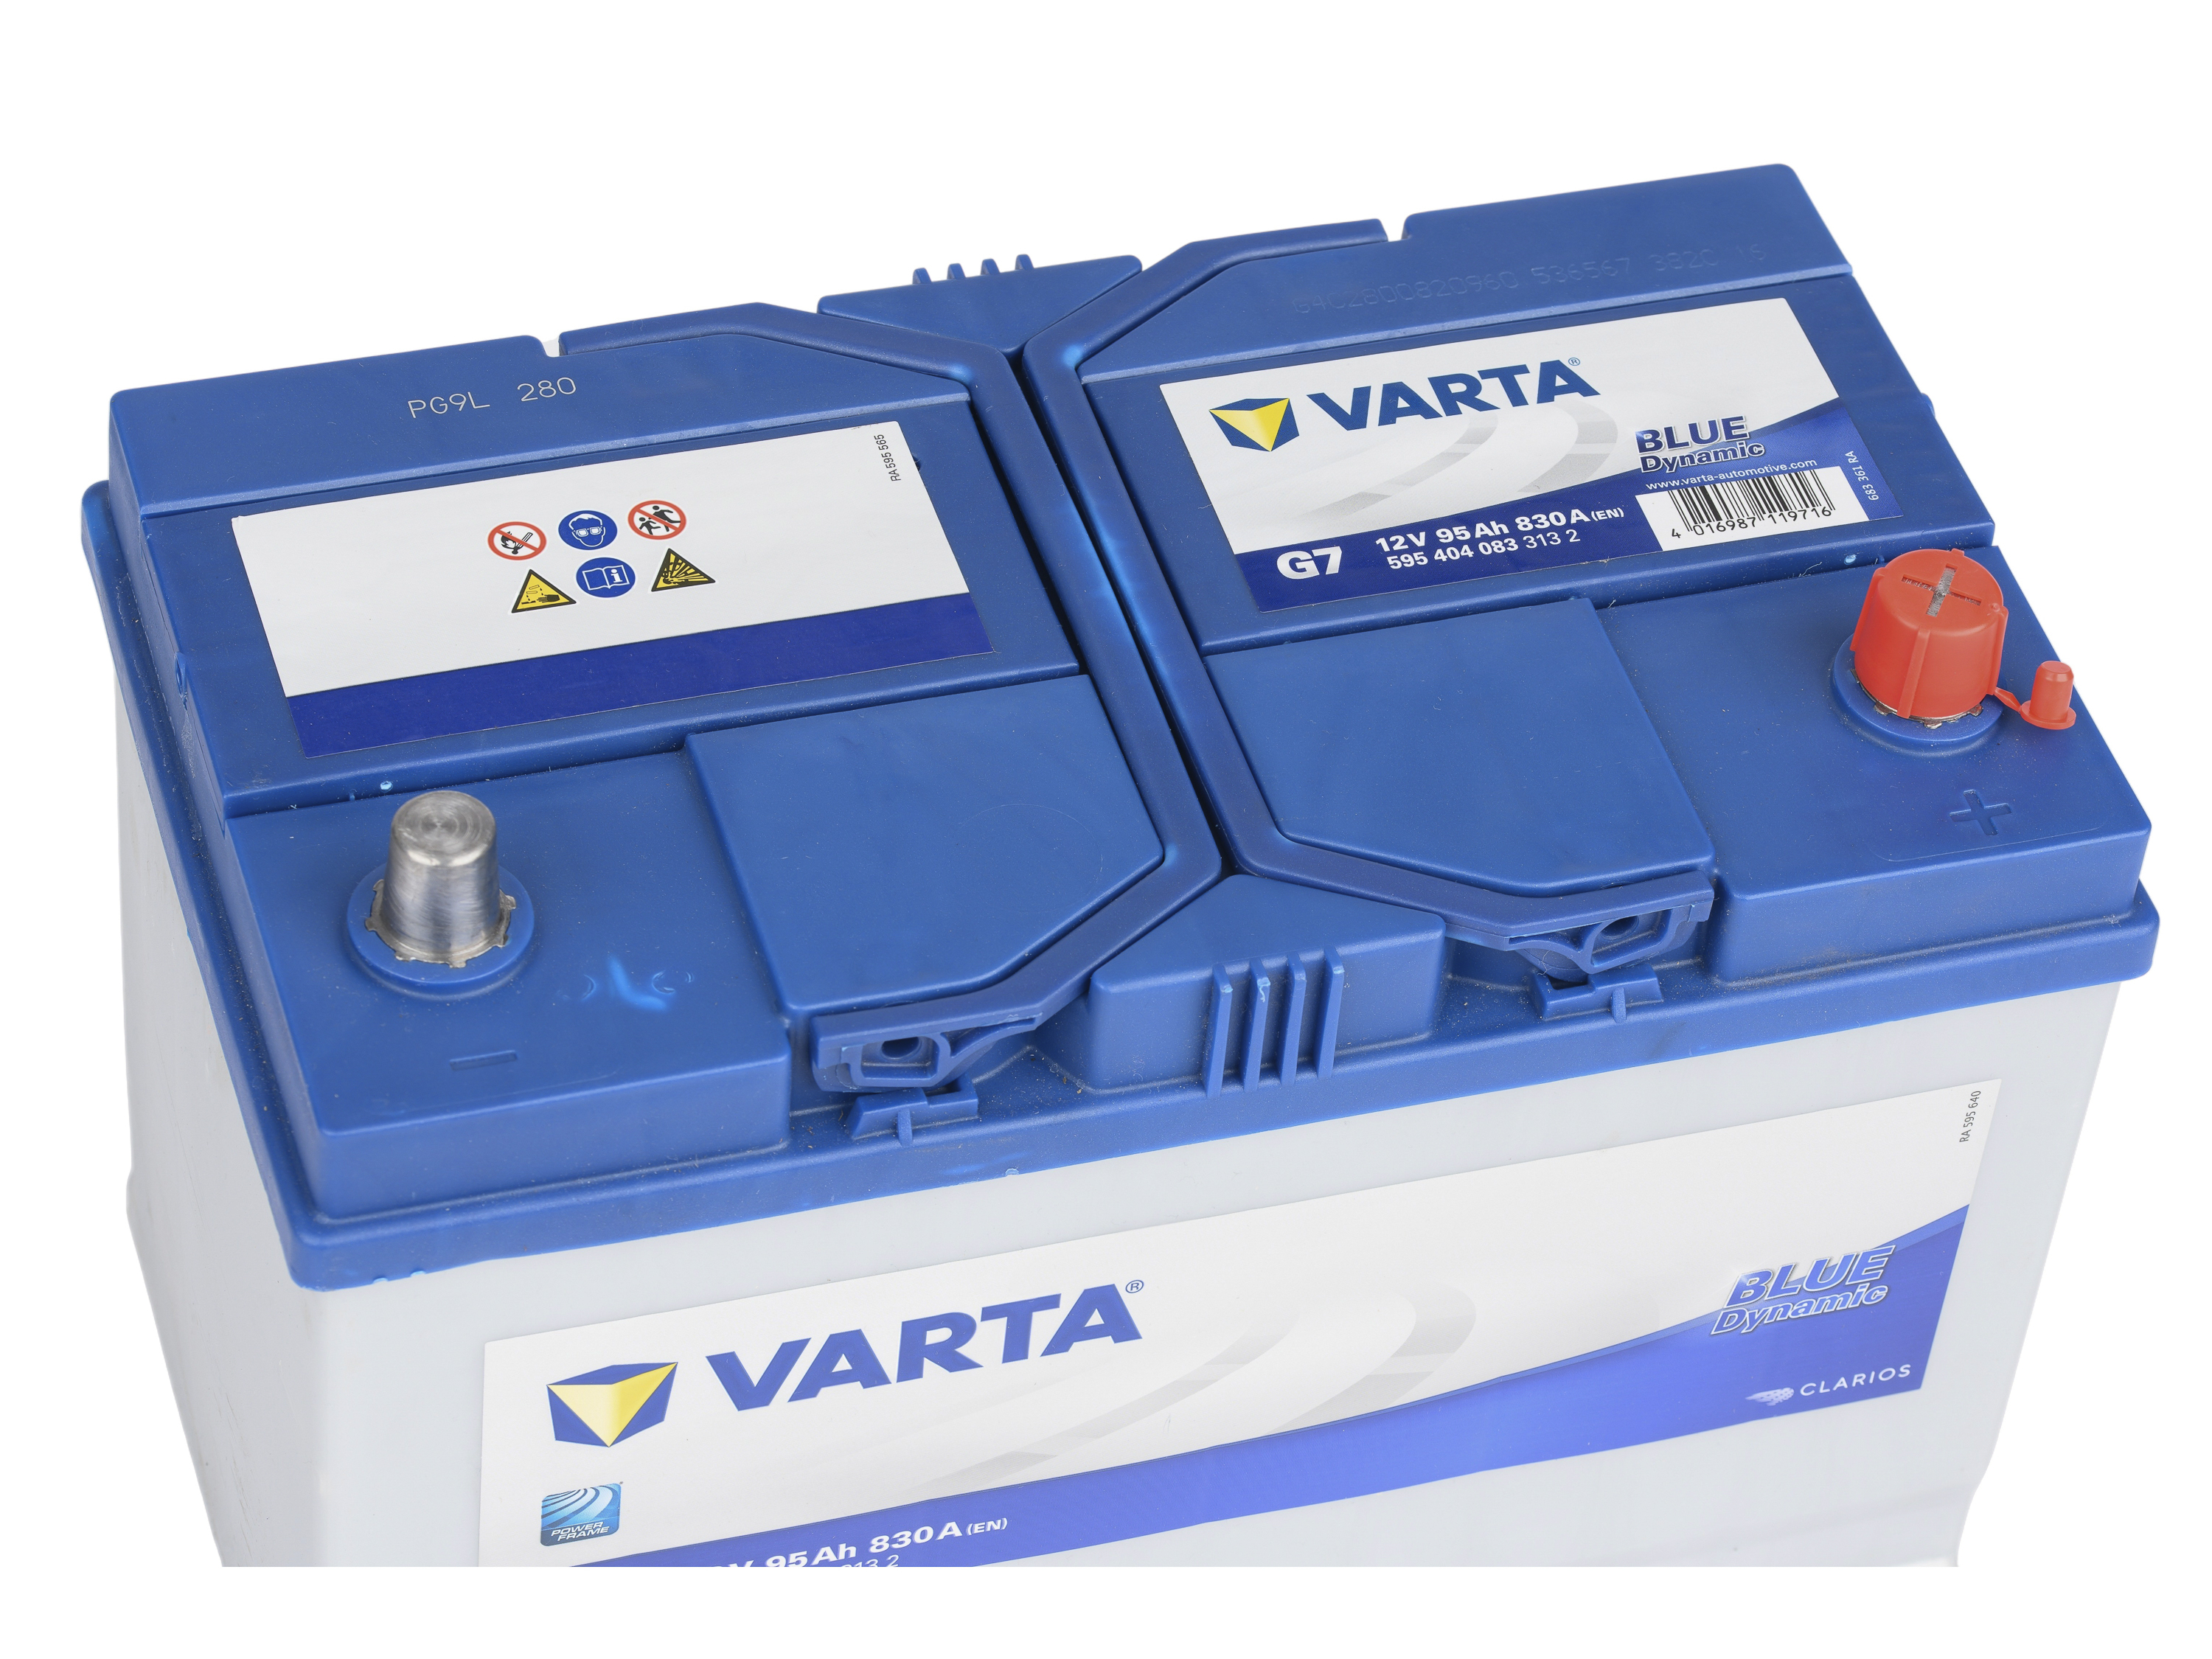 VARTA batteri blå dynamisk G7 595.404.083 12V/95Ah